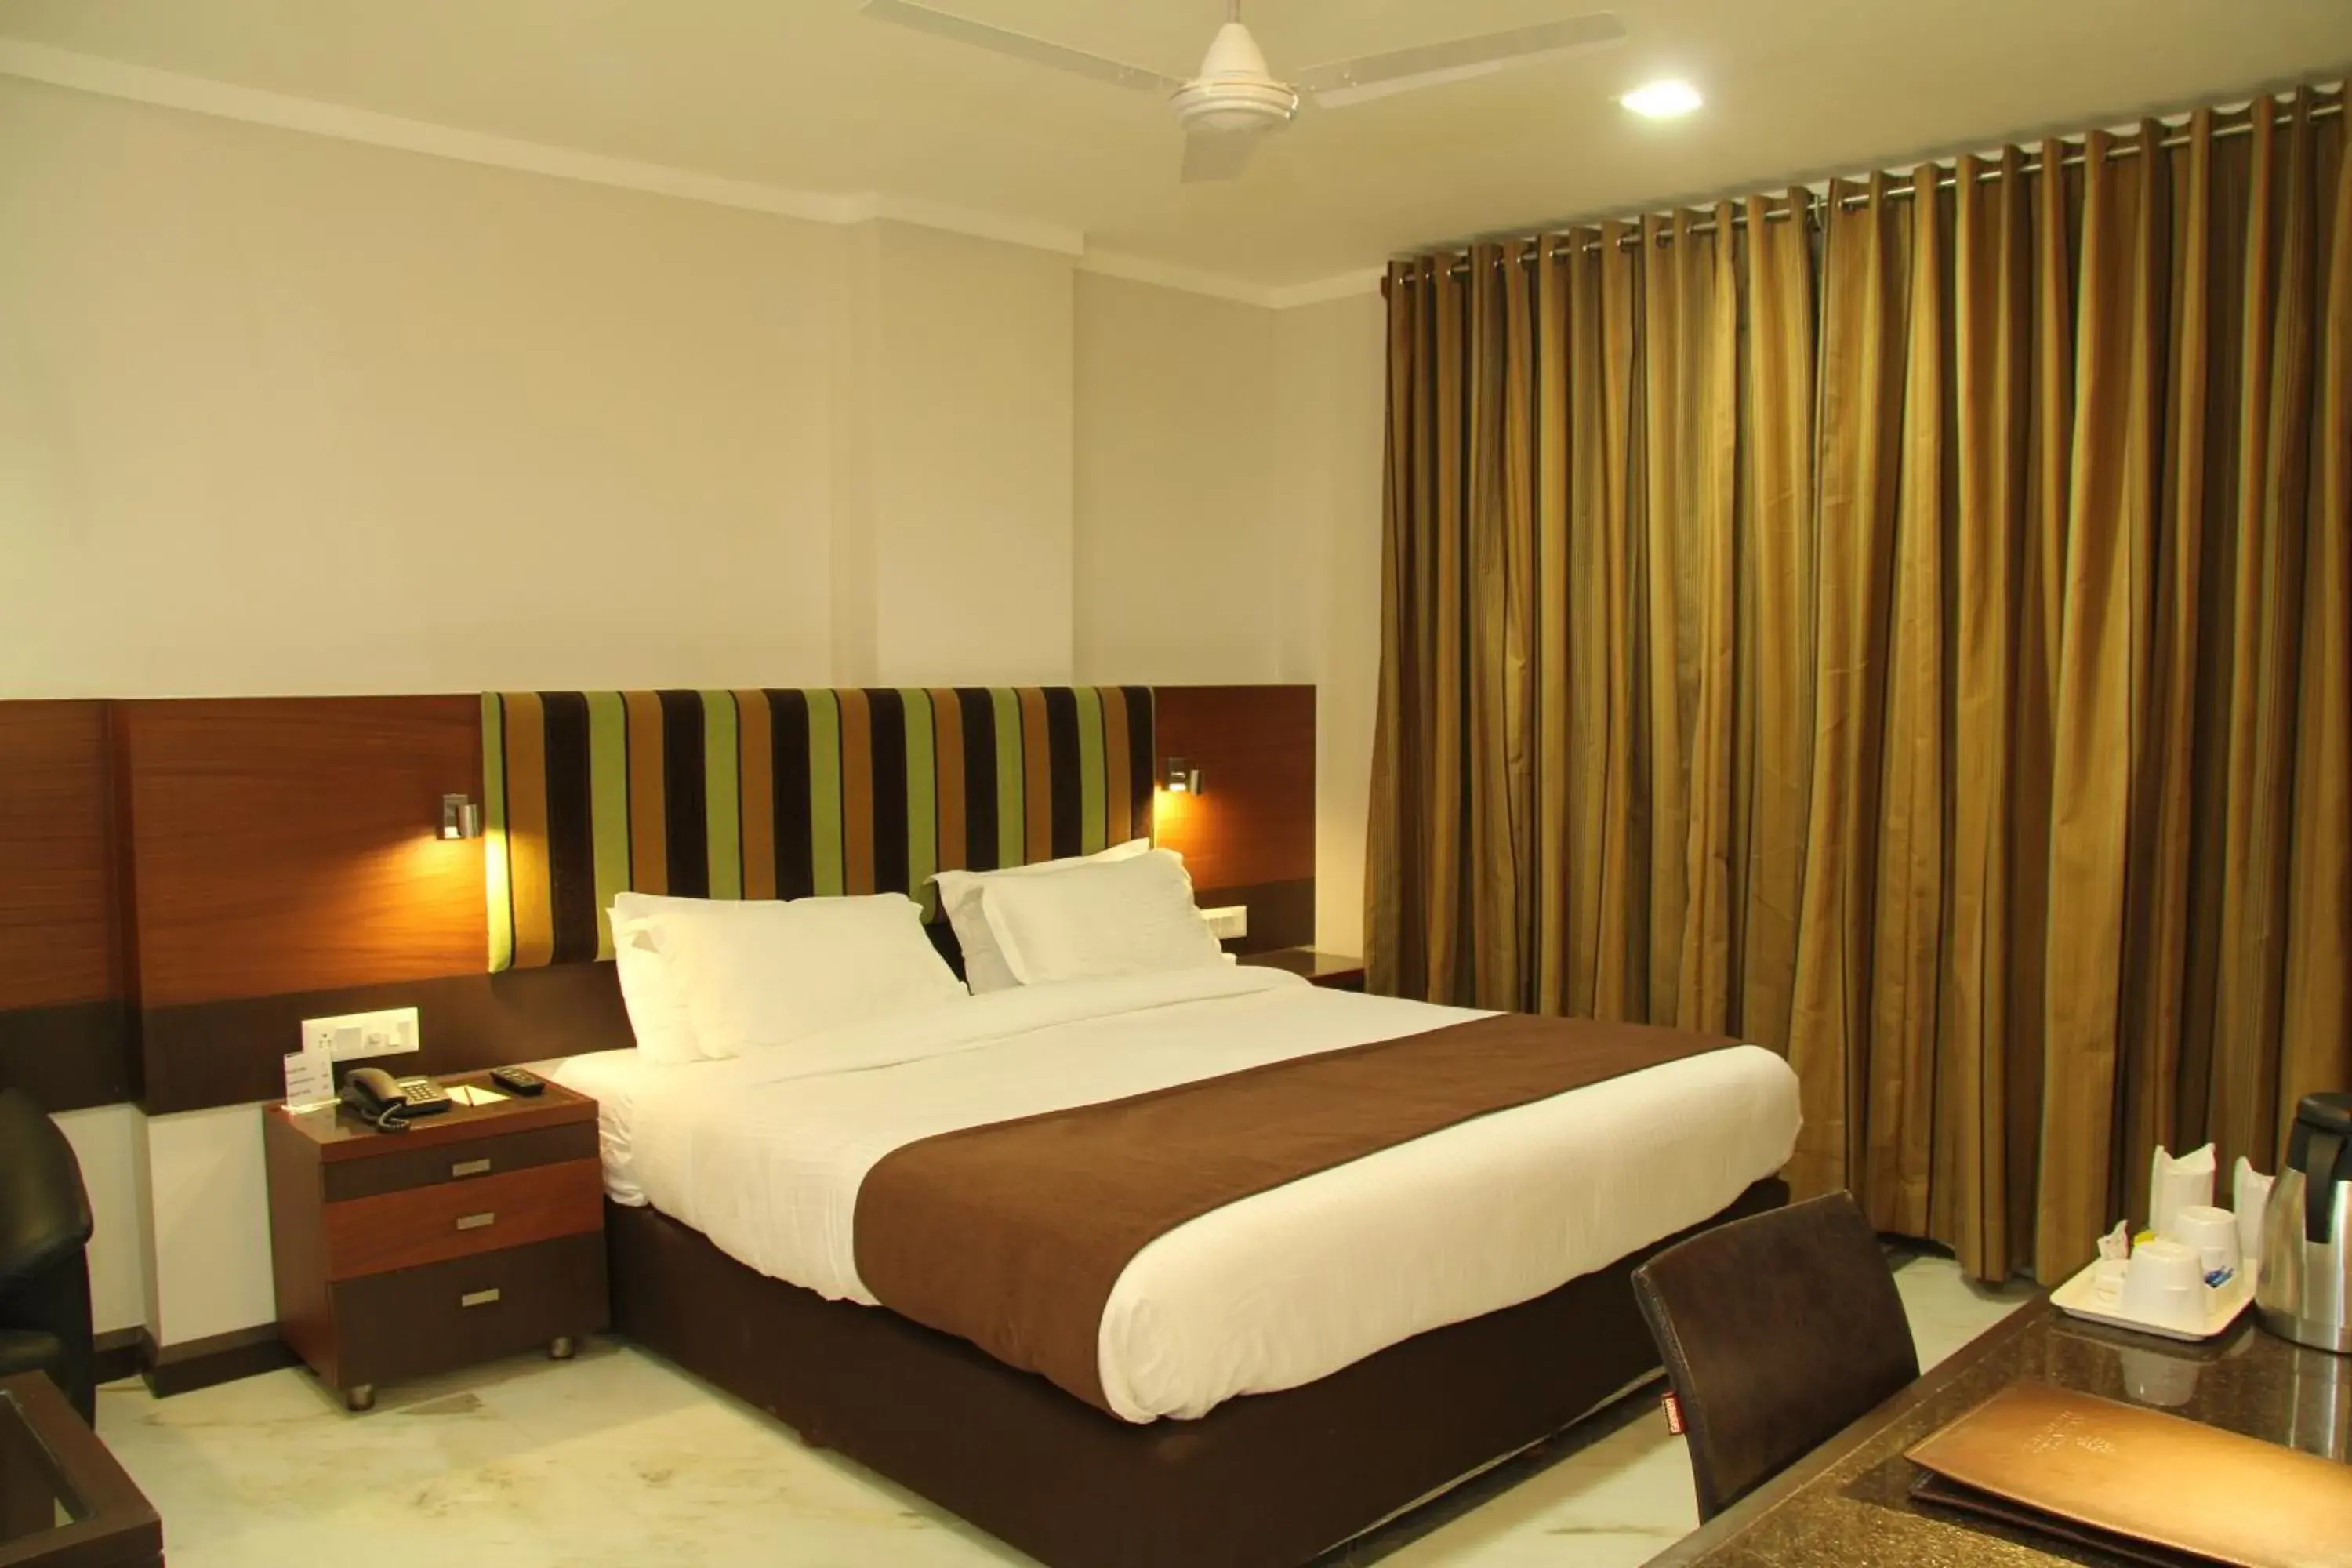 Bed, Room Photo in Amantra Comfort Hotel